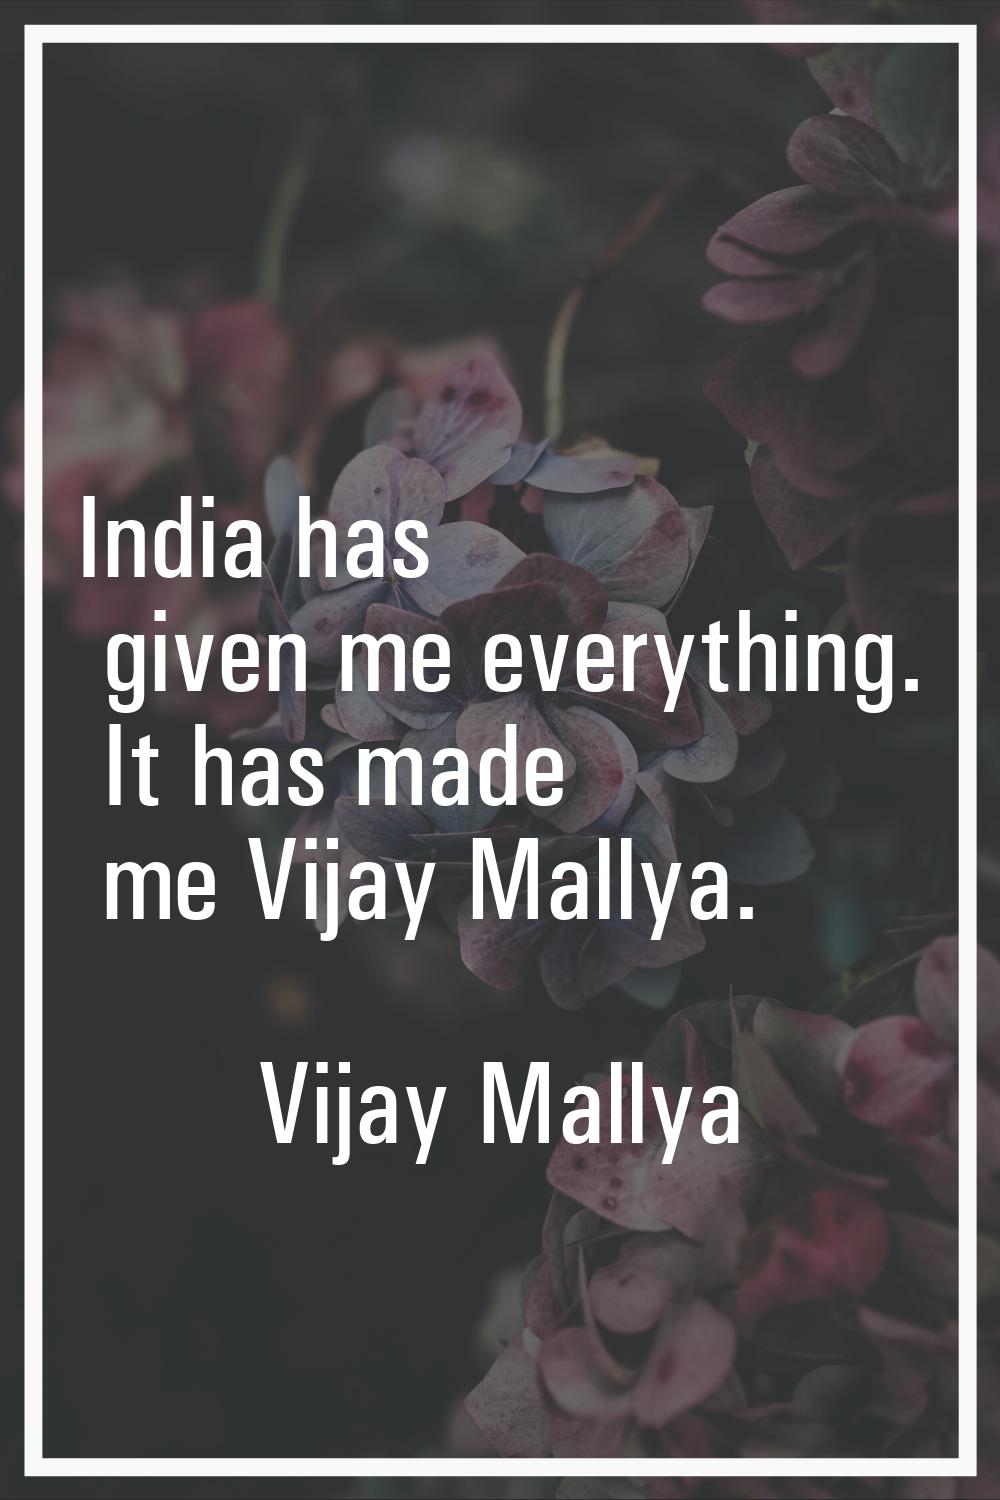 India has given me everything. It has made me Vijay Mallya.